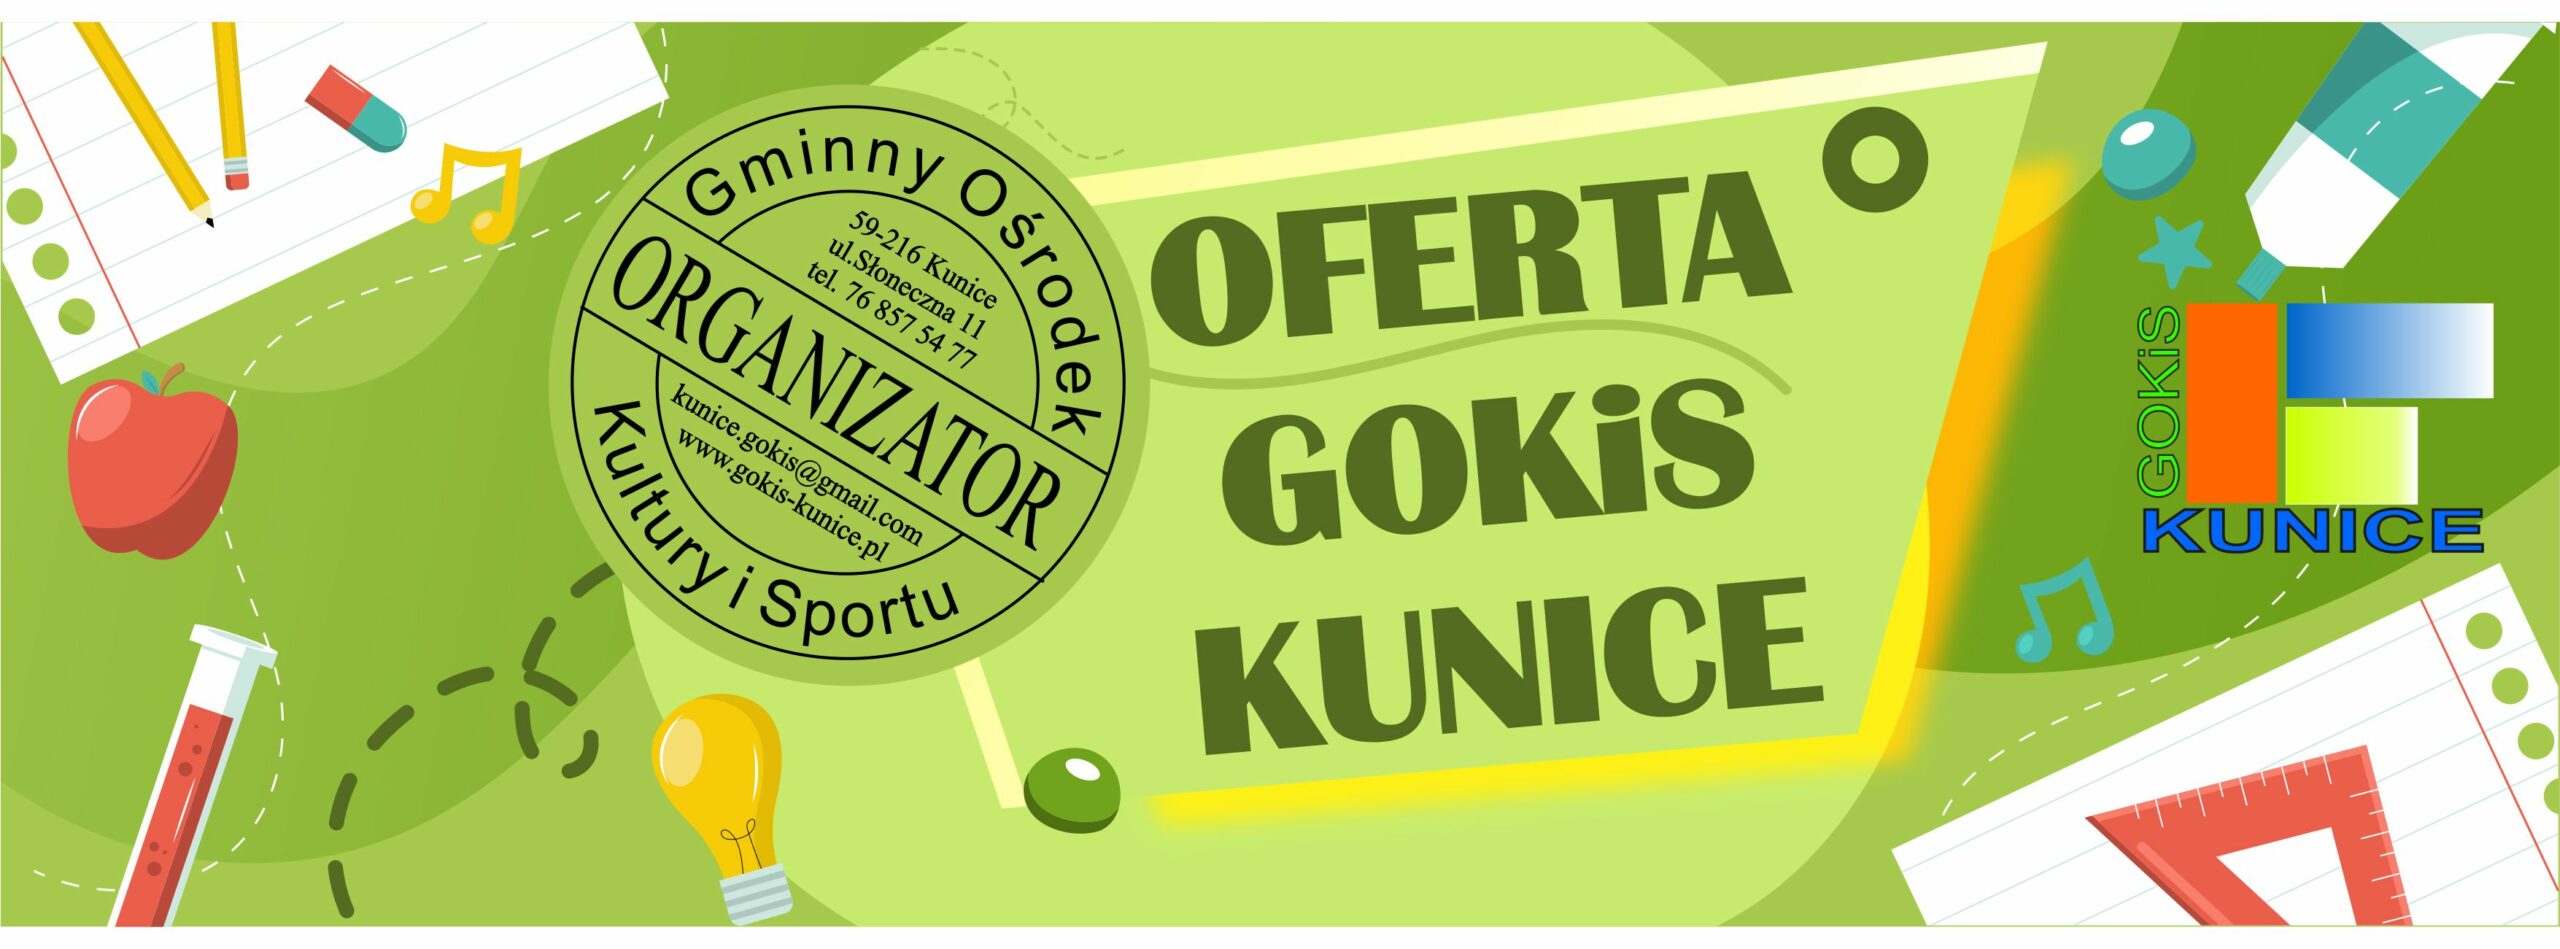 http://www.gokis-kunice.pl/gokis/oferta/